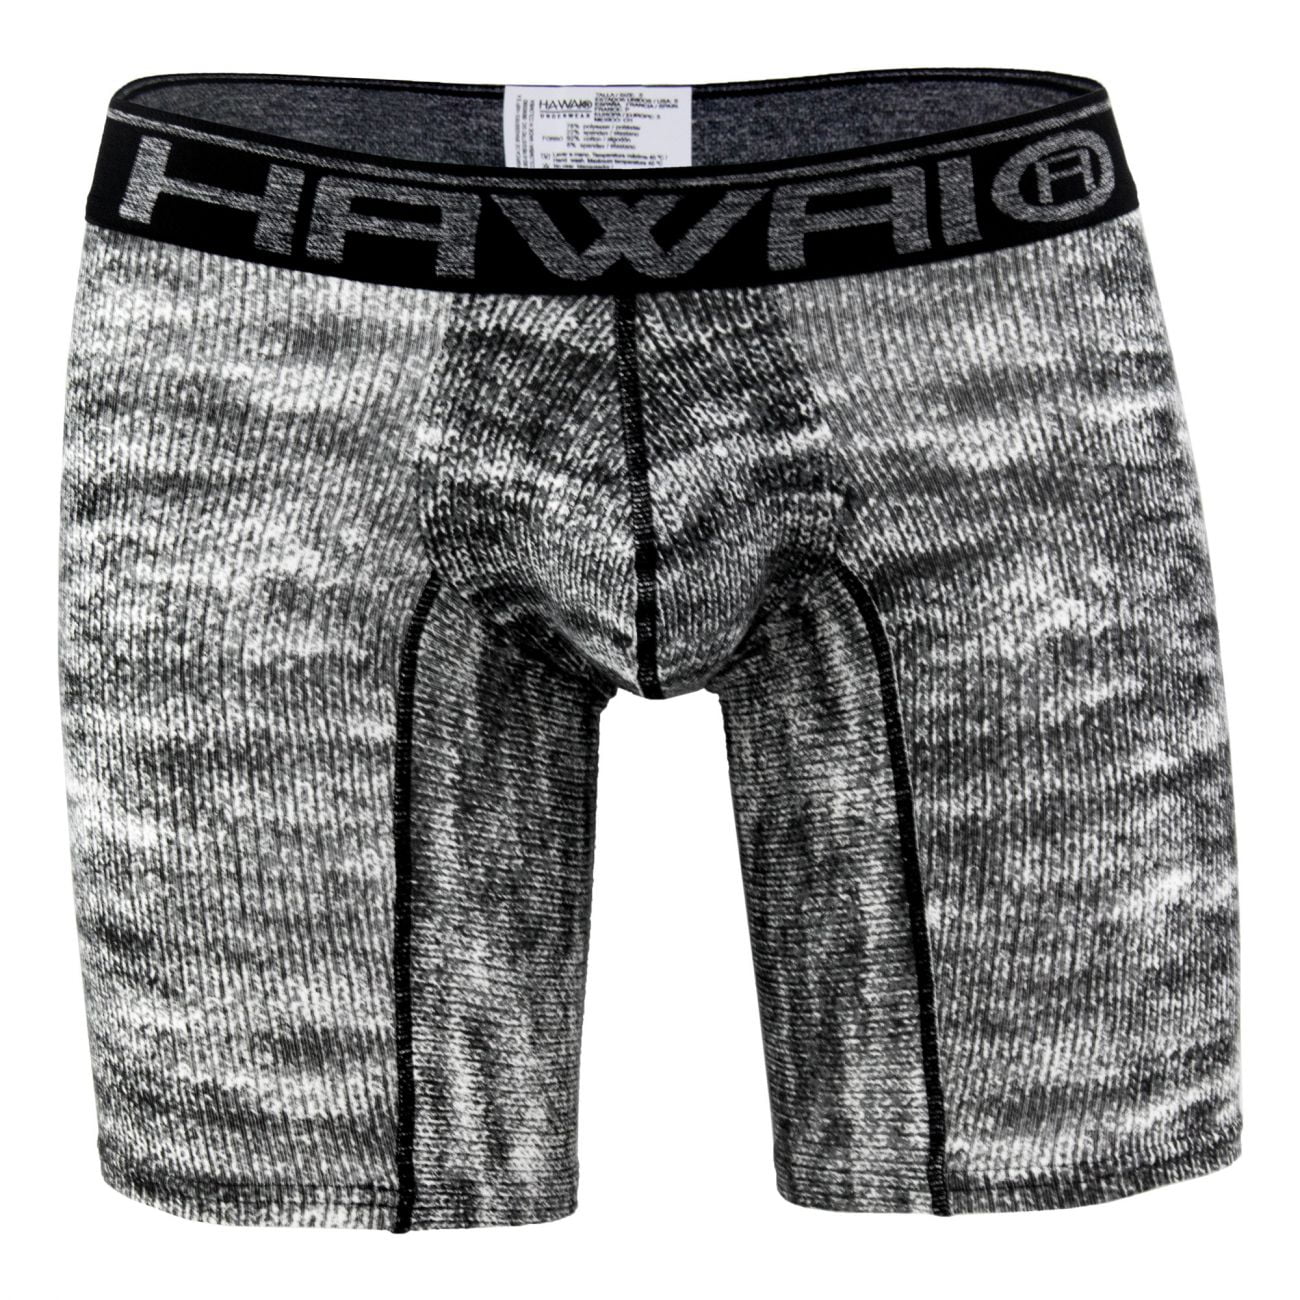 HAWAI 41804 Boxer Briefs - Walmart.com